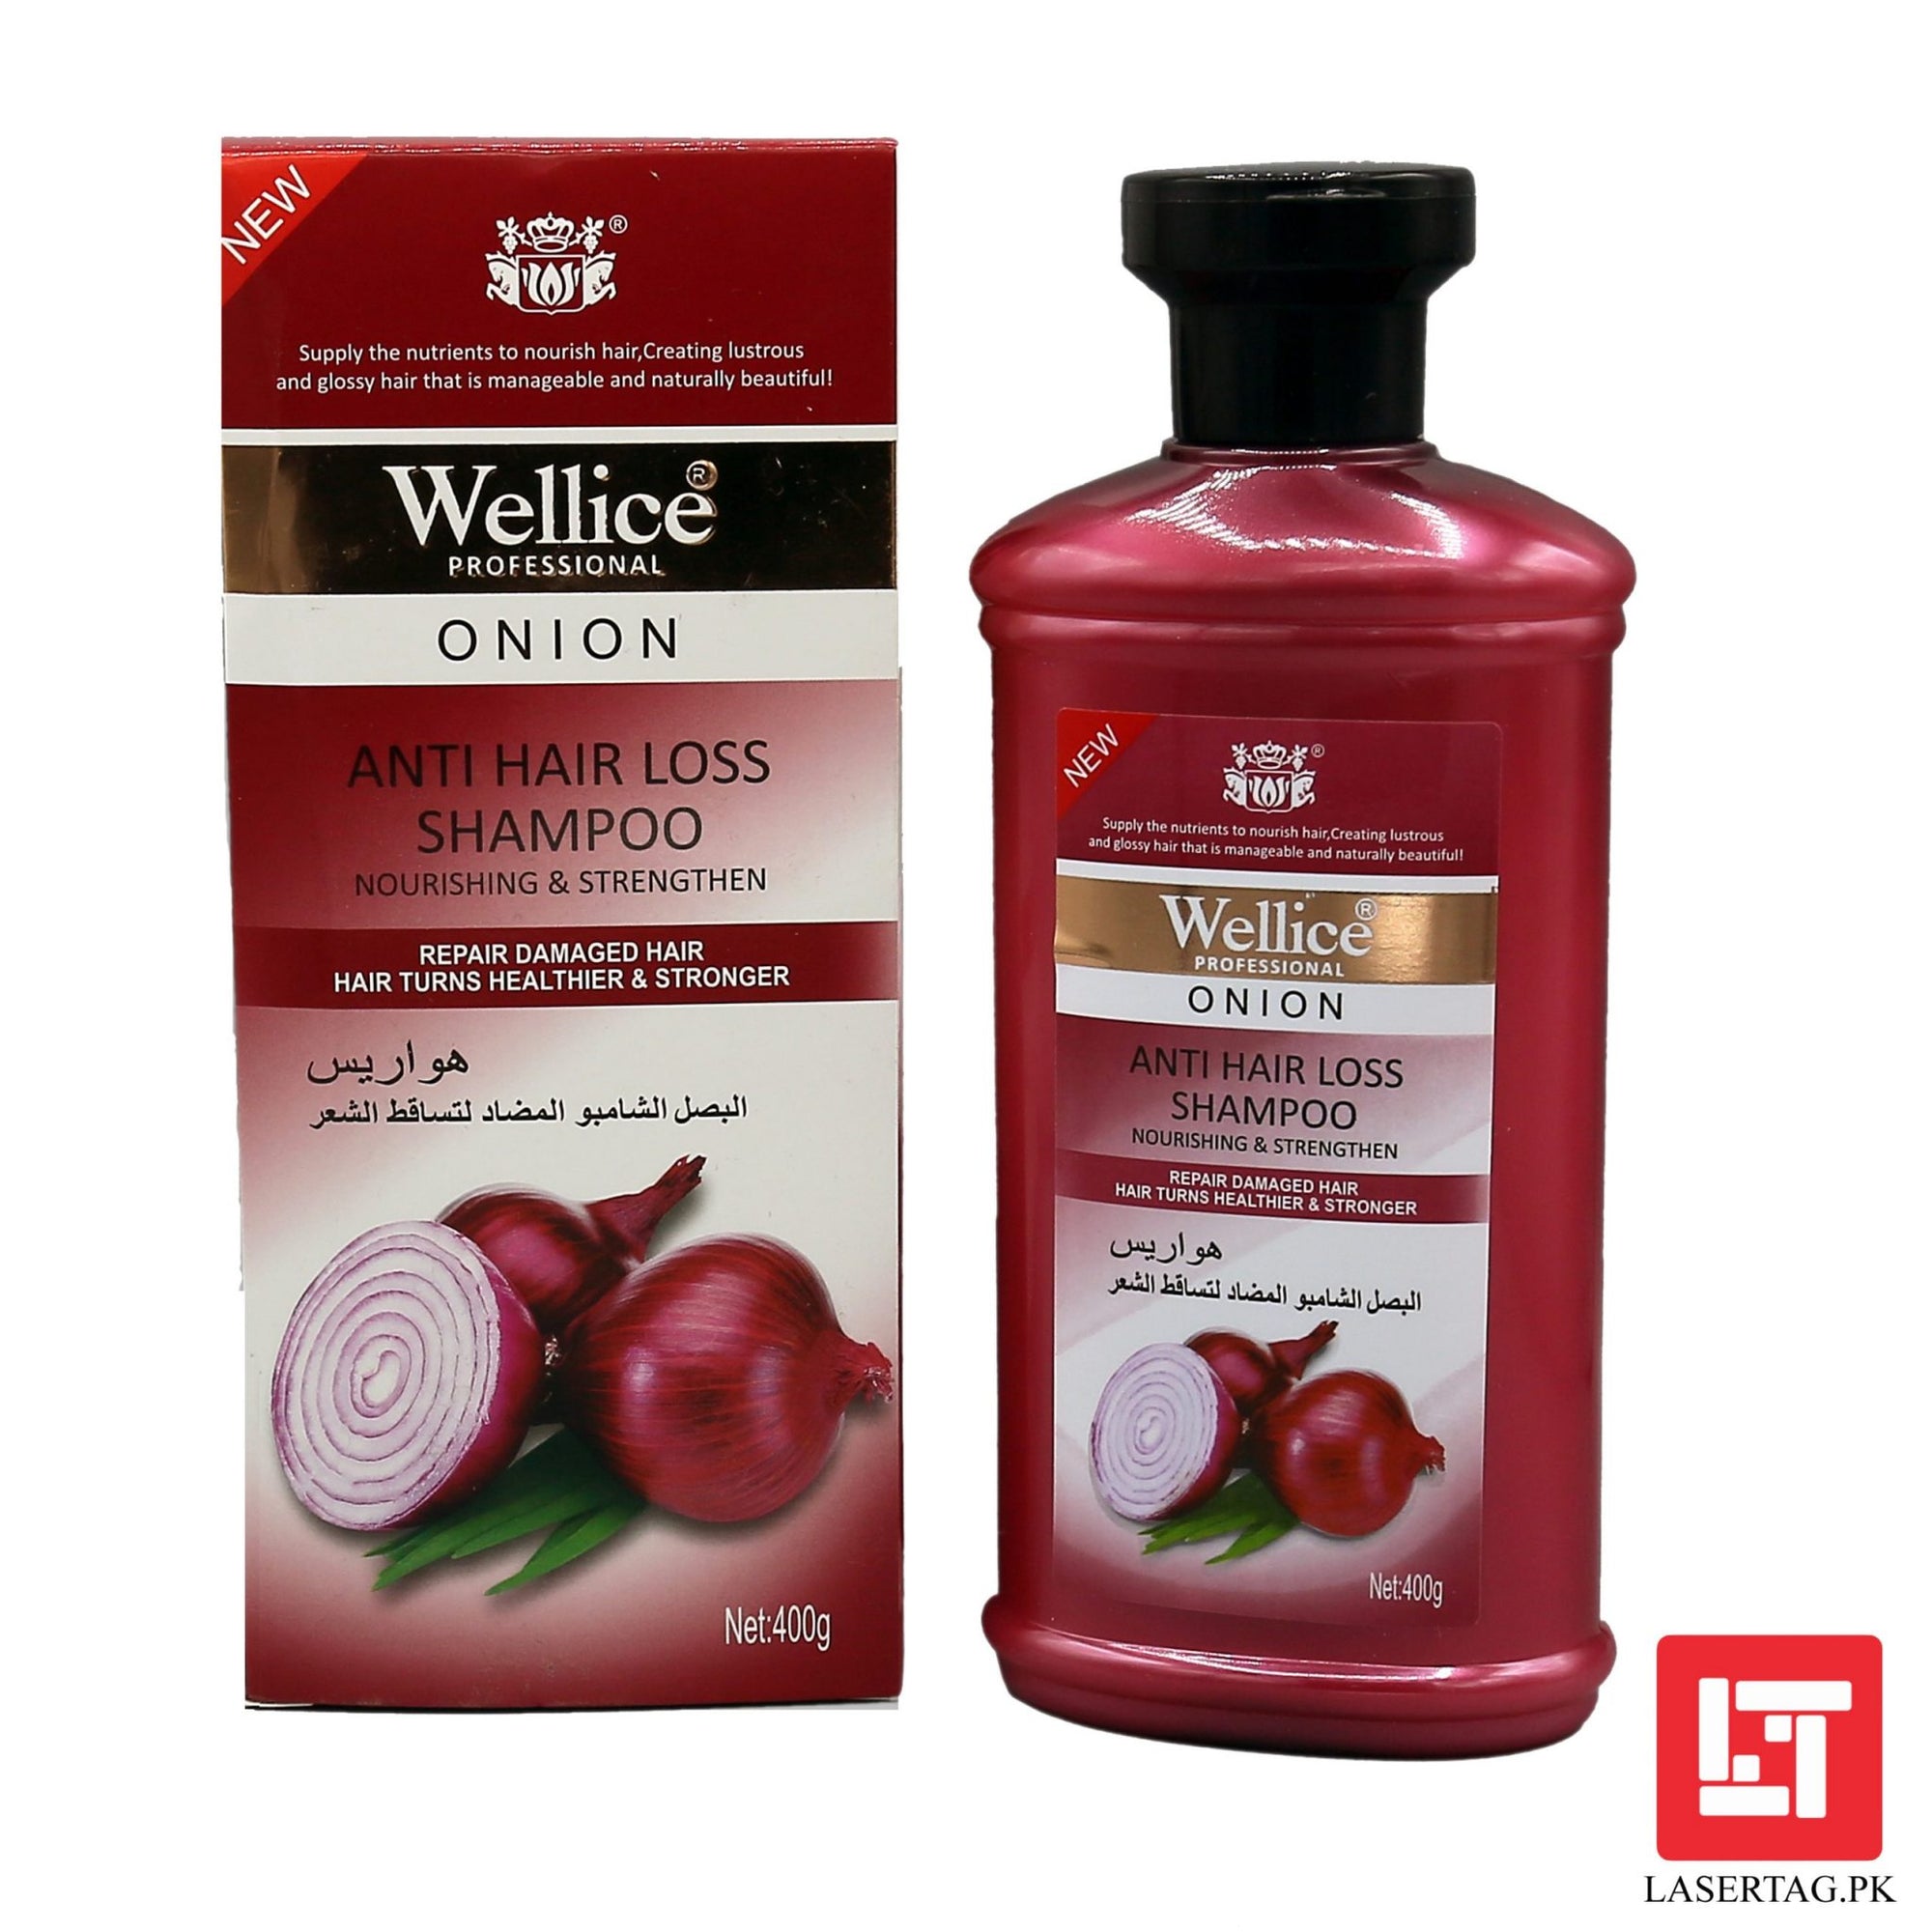 Wellice Onion Anti Hair Loss Shampoo 400g freeshipping - lasertag.pk